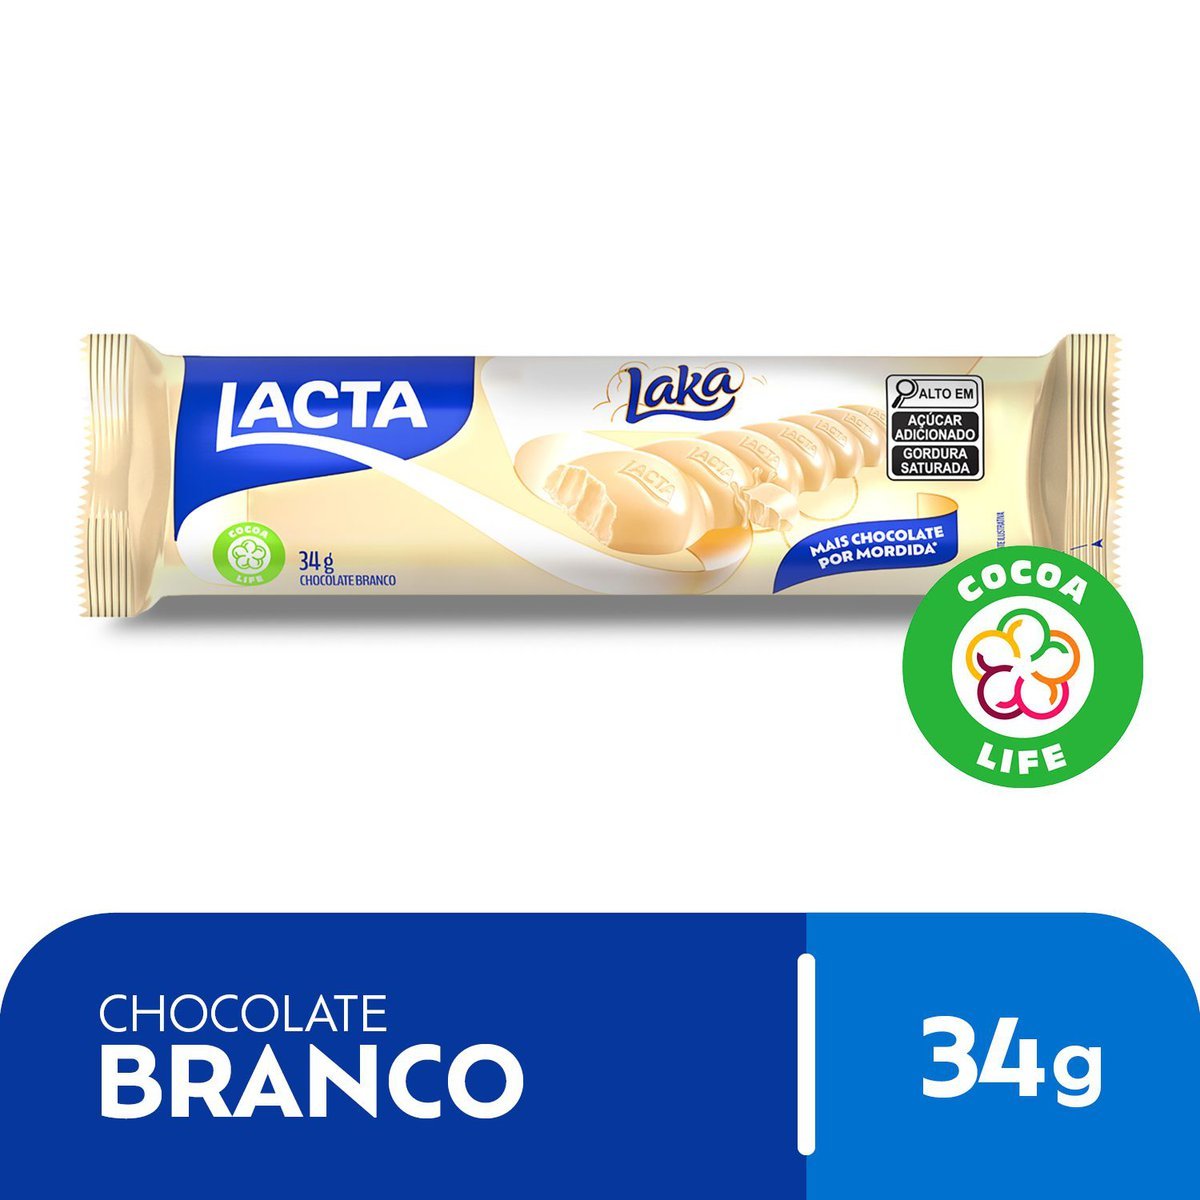 Chocolate Branco Lacta Laka Pacote 34g